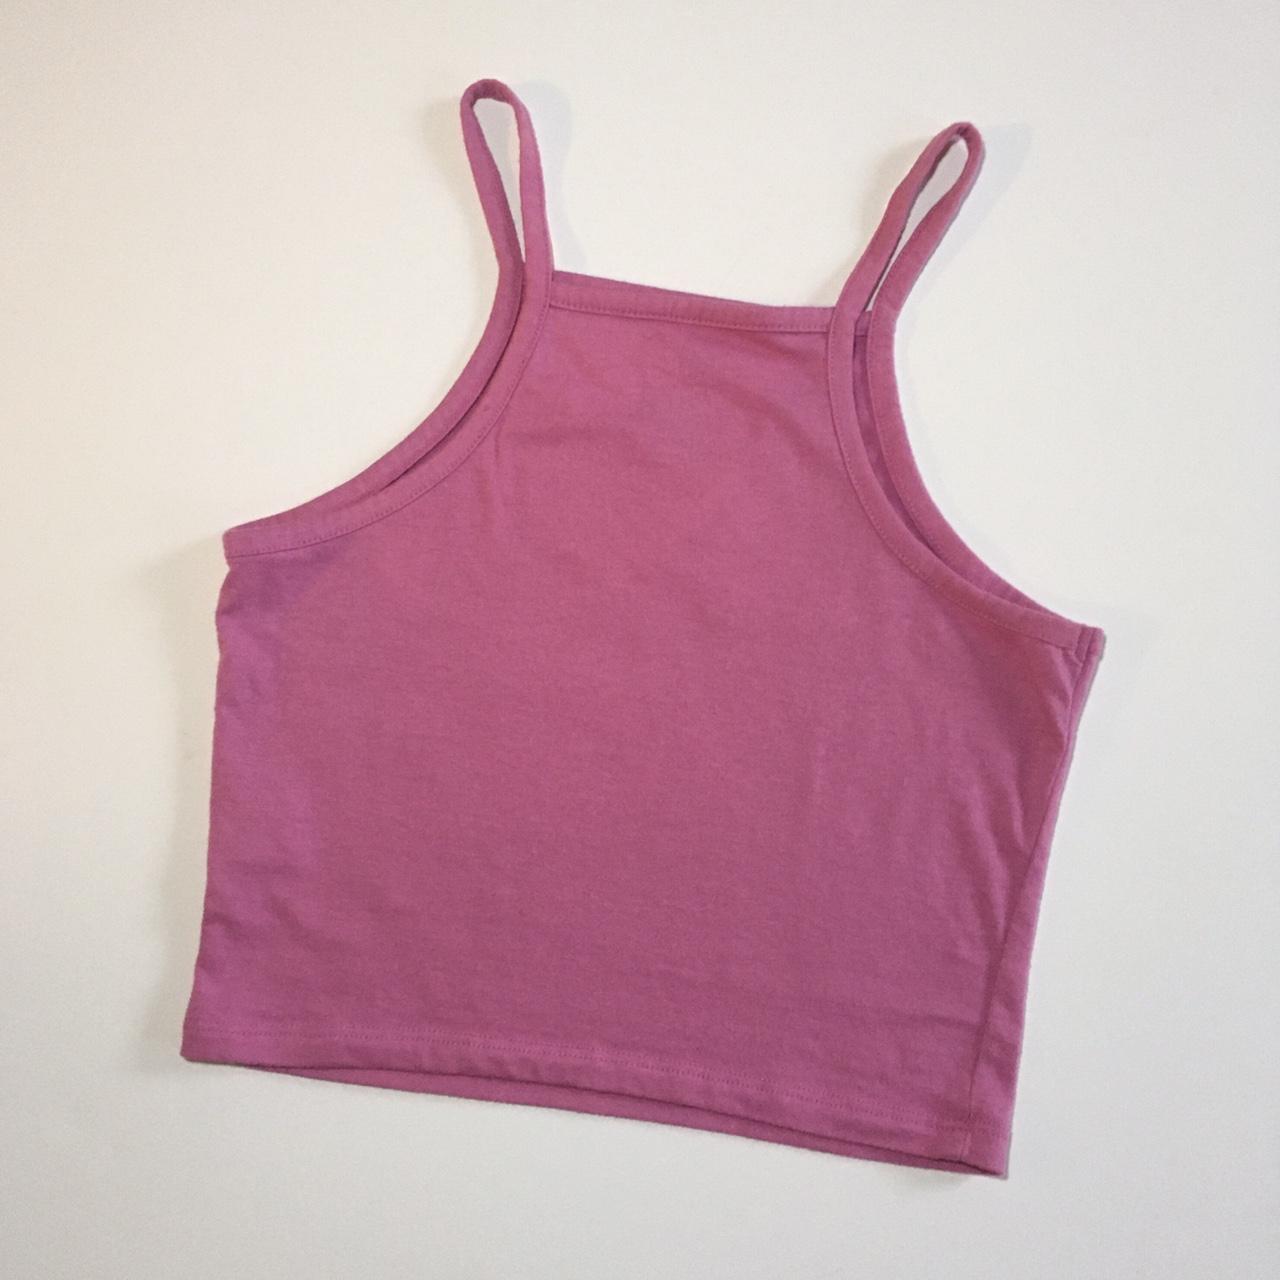 PacSun Women's Pink Vests-tanks-camis (3)